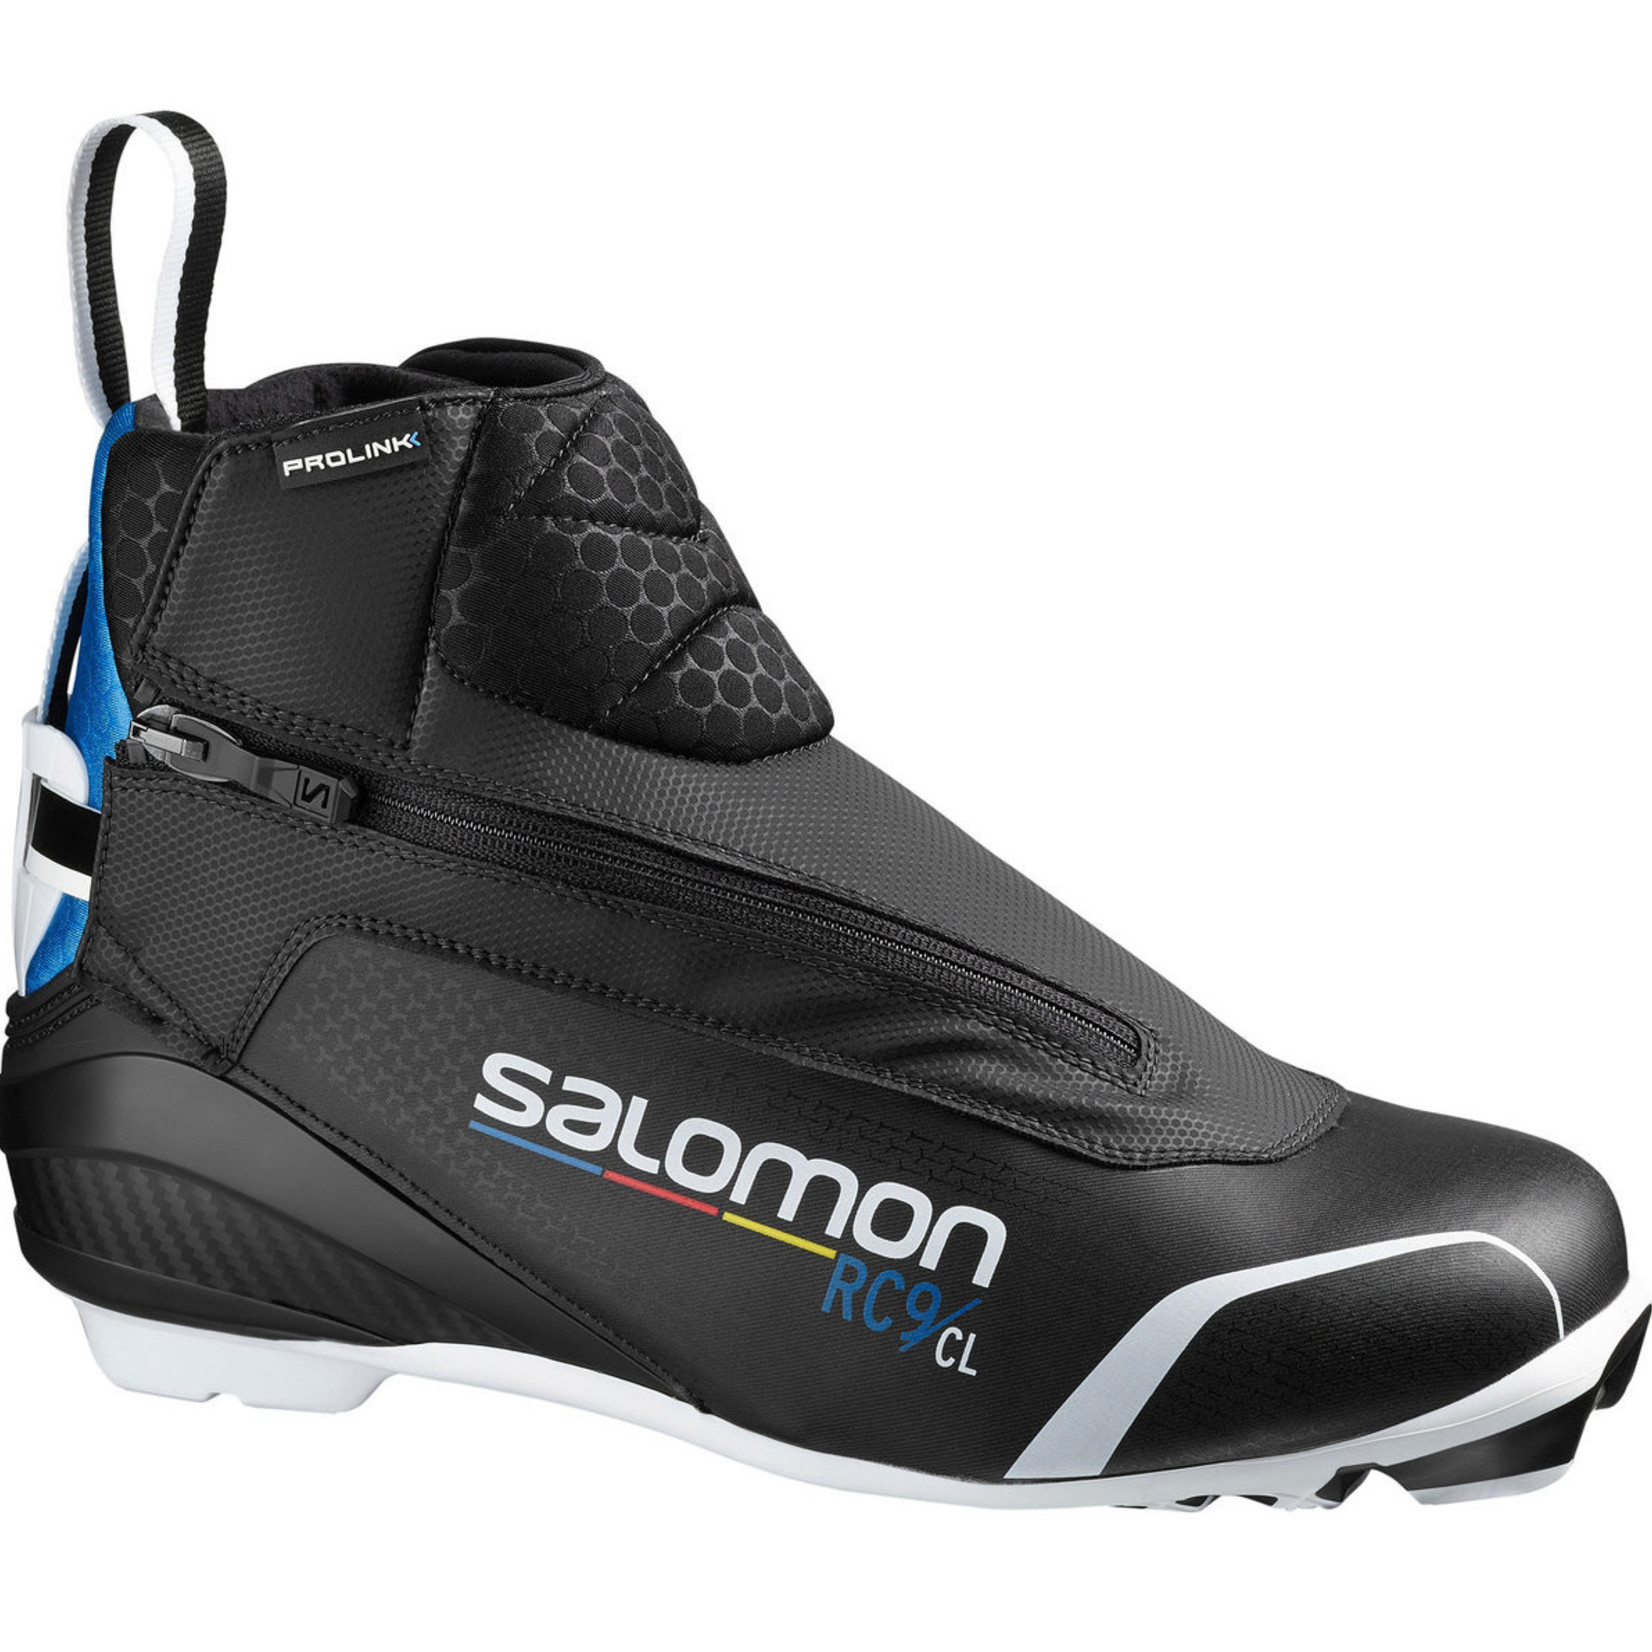 SALOMON Salomon Prolink RC9 Classic Boot 2020